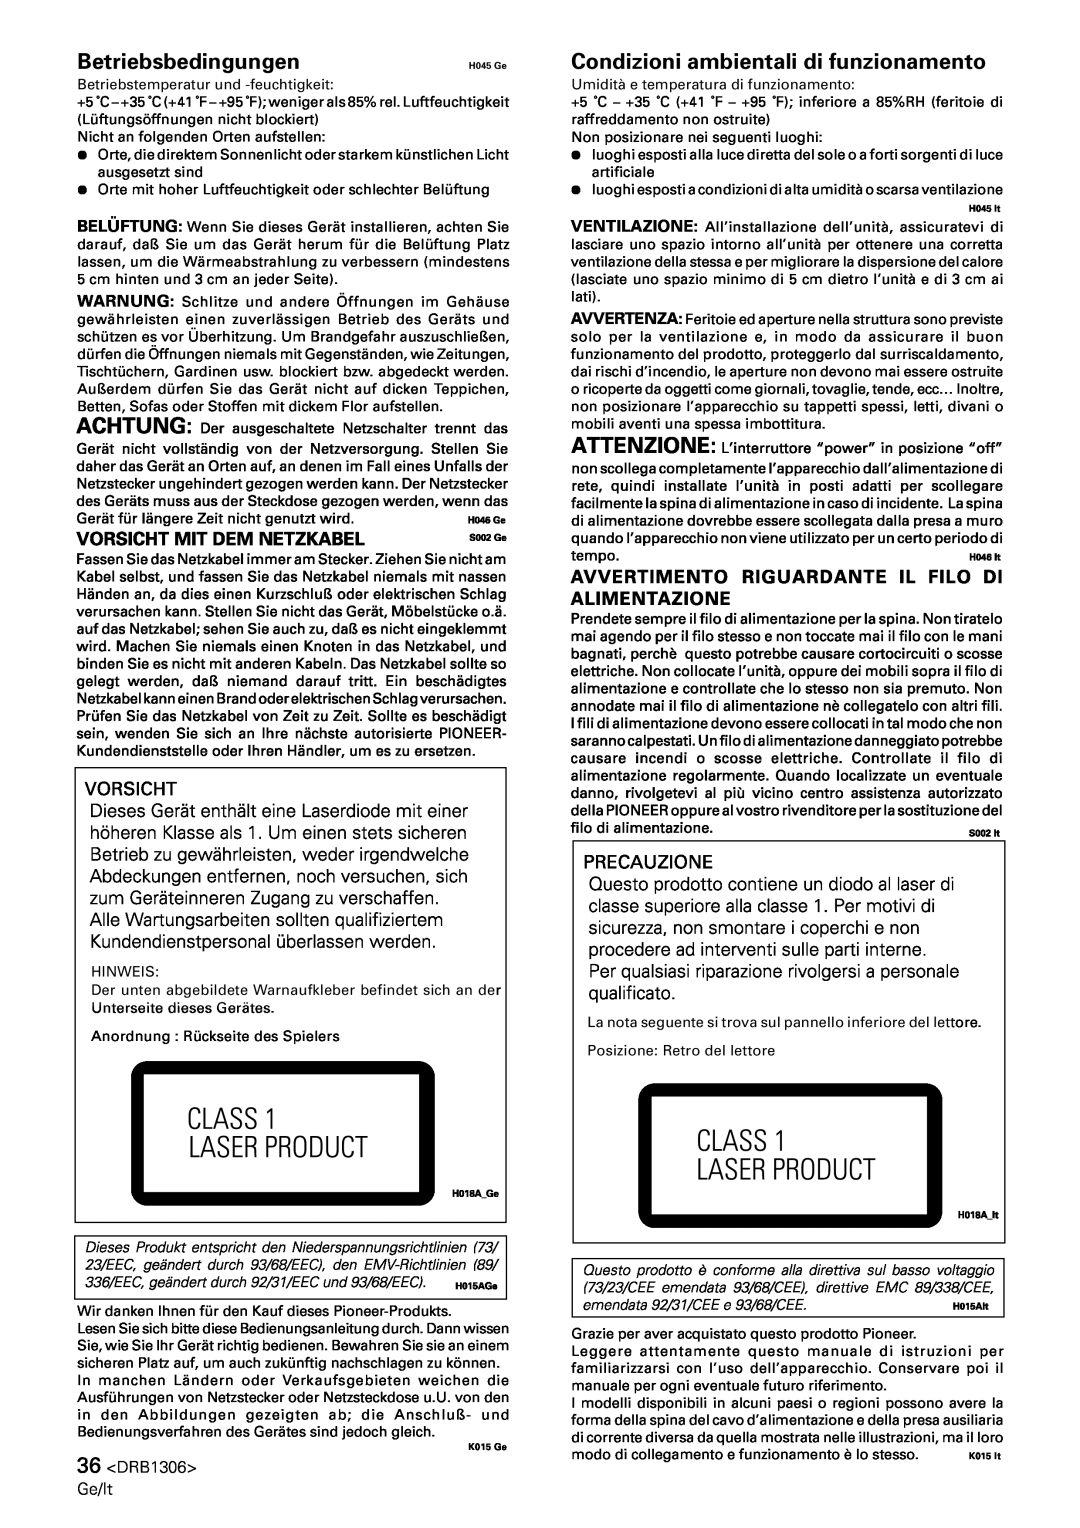 Pioneer CMX-3000 operating instructions Betriebsbedingungen, Condizioni ambientali di funzionamento, 36<DRB1306> Ge/It 